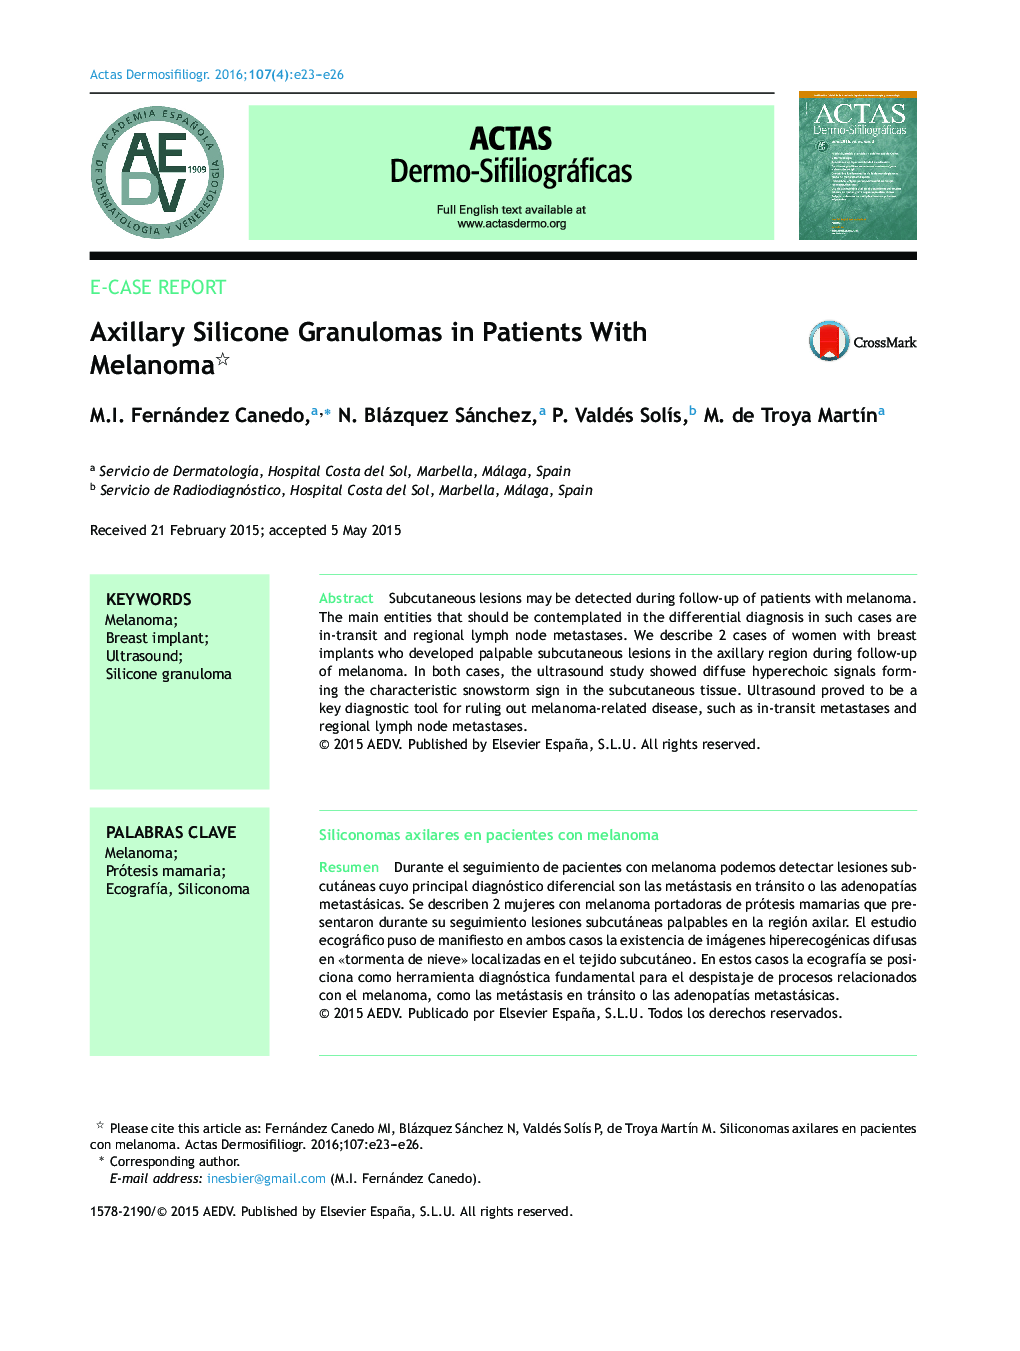 Axillary Silicone Granulomas in Patients With Melanoma 